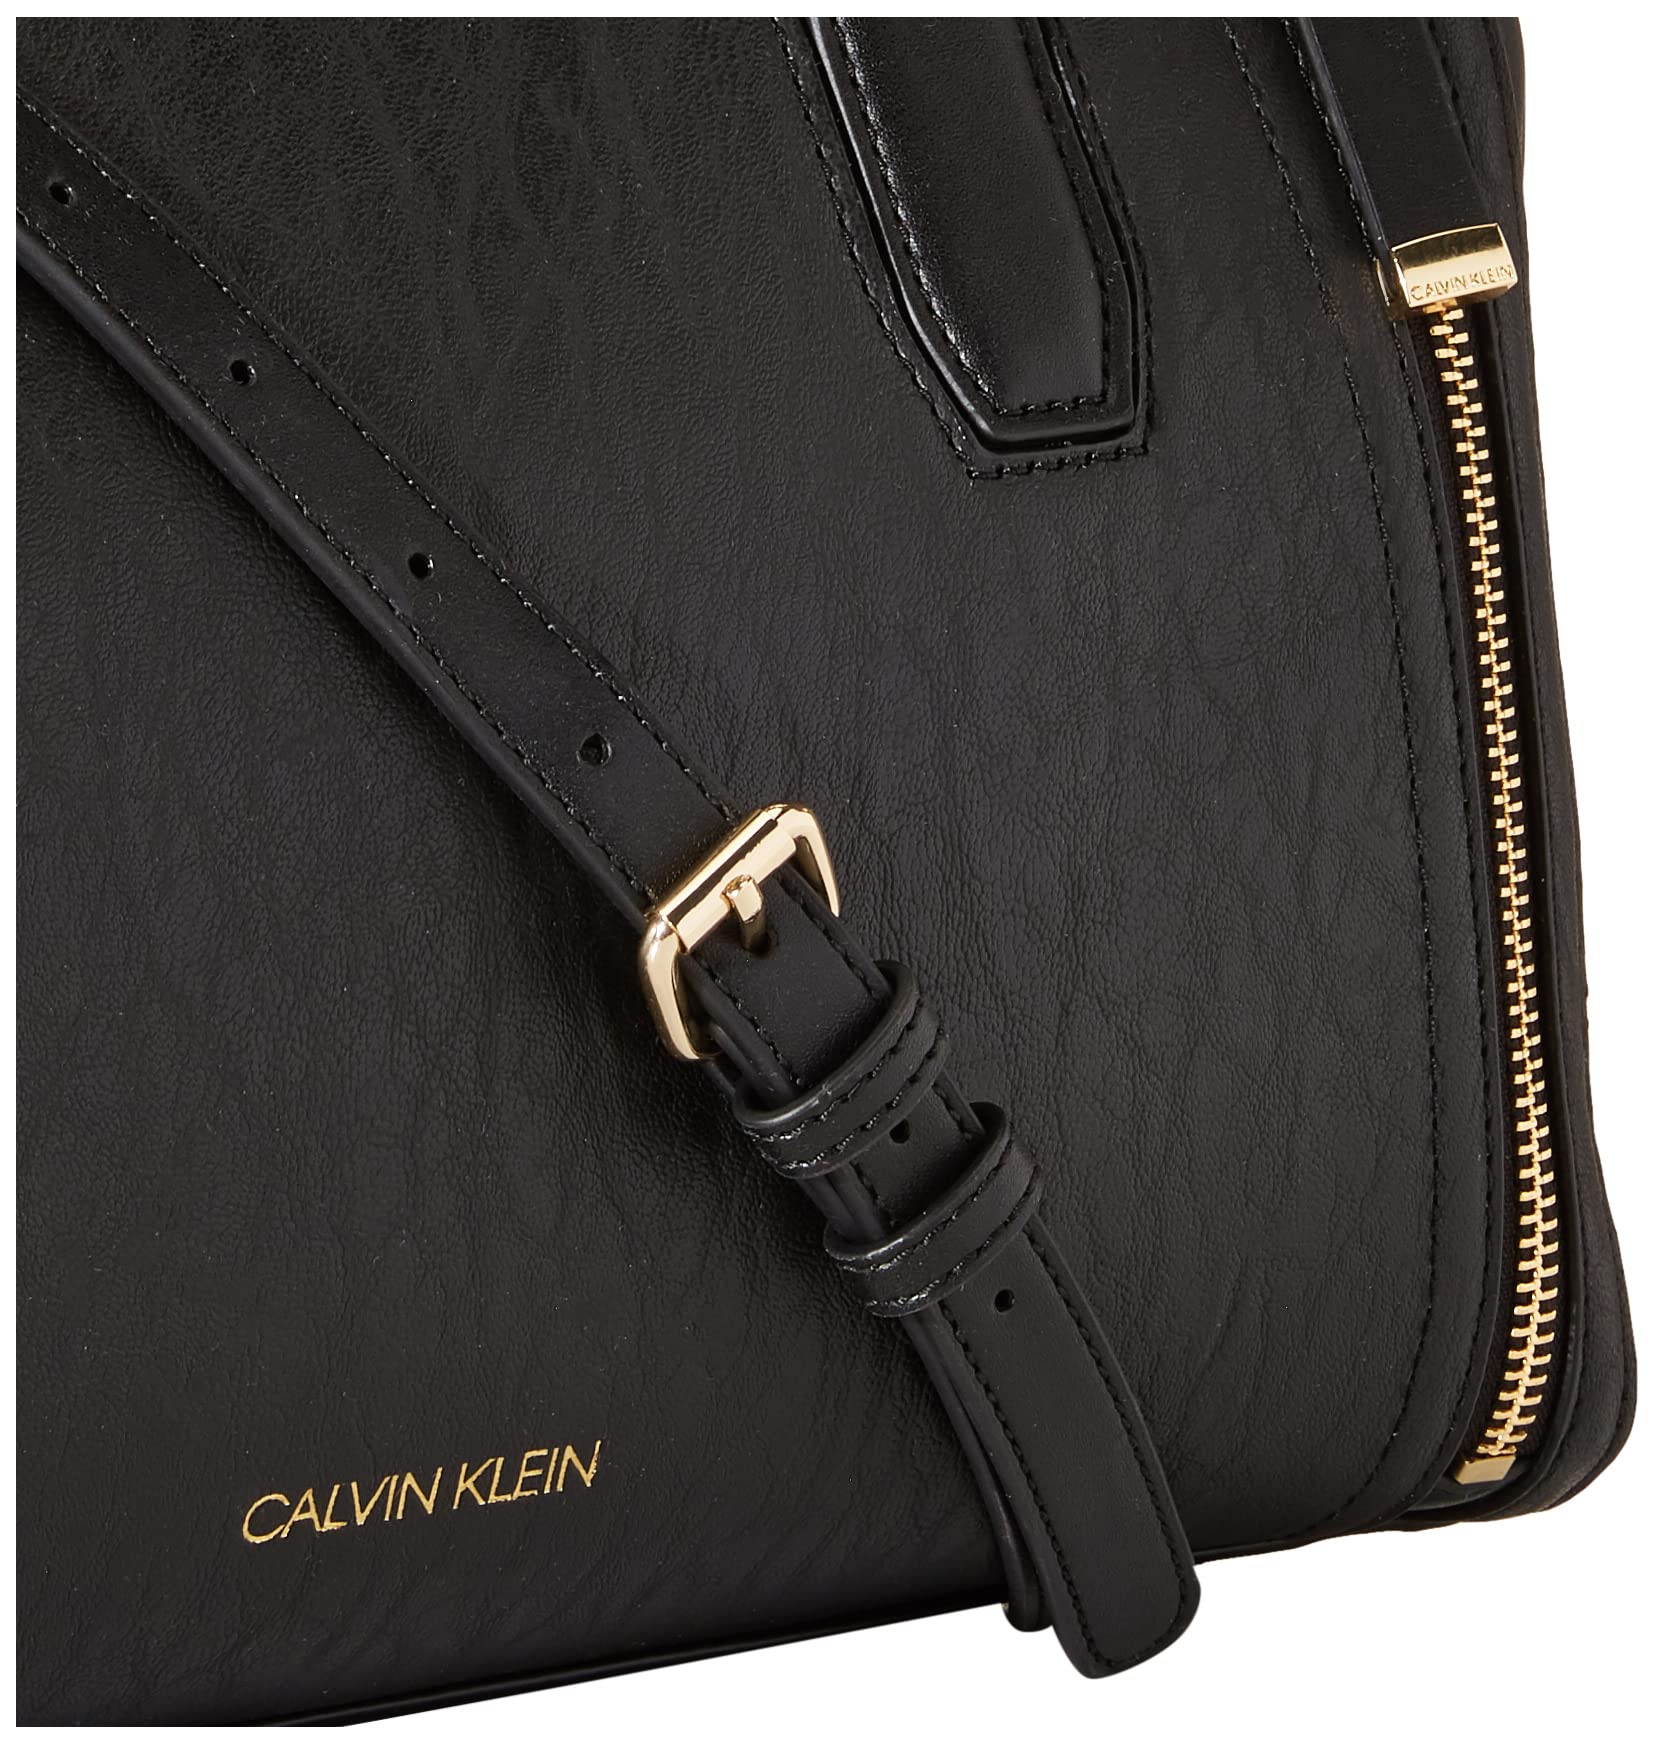 Calvin Klein Reyna Novelty Satchel, Caramel Combo, One Size